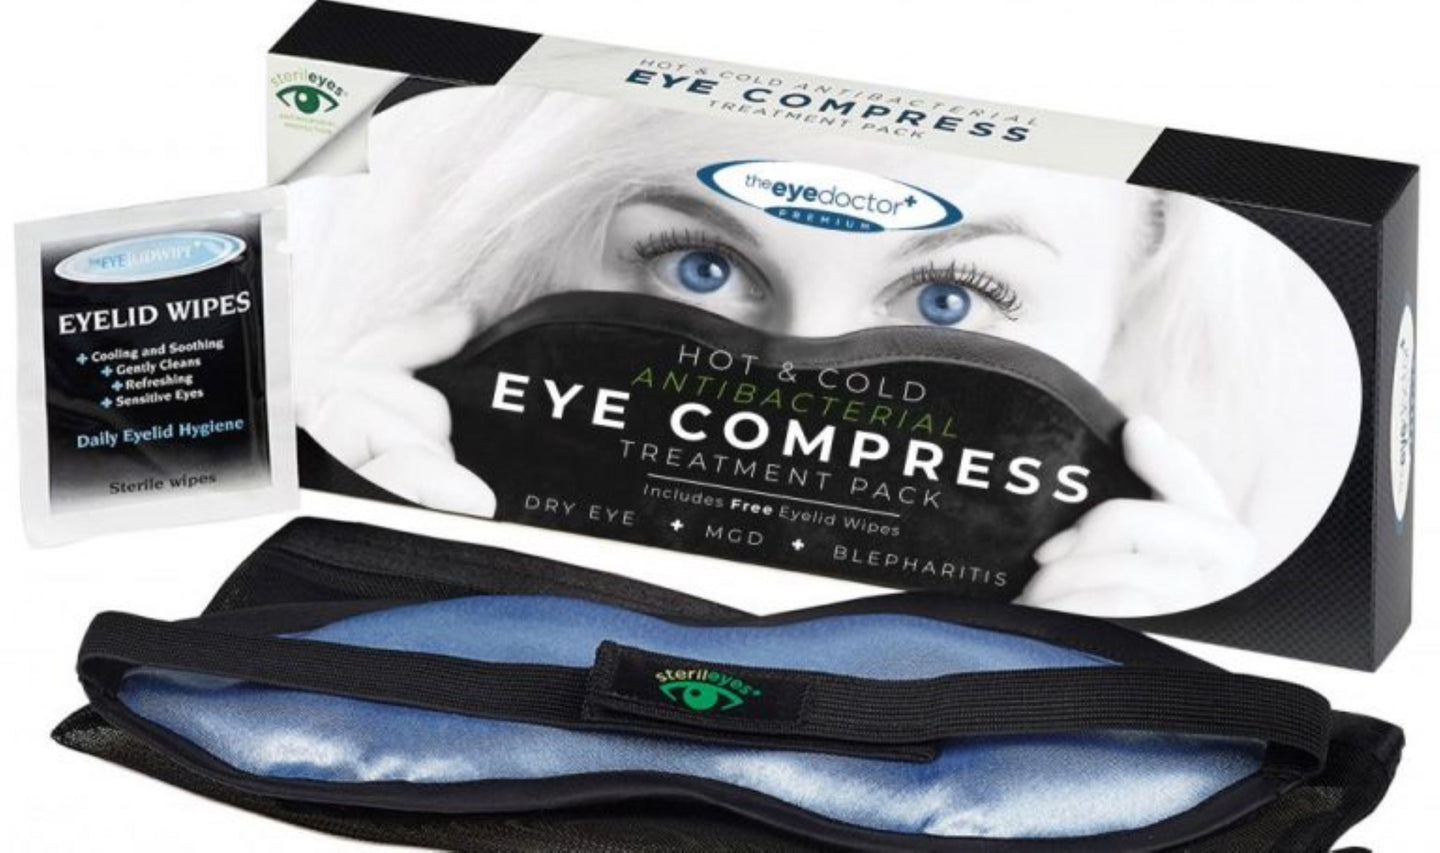 The Eye Doctor Premium Eye Treatment Pack